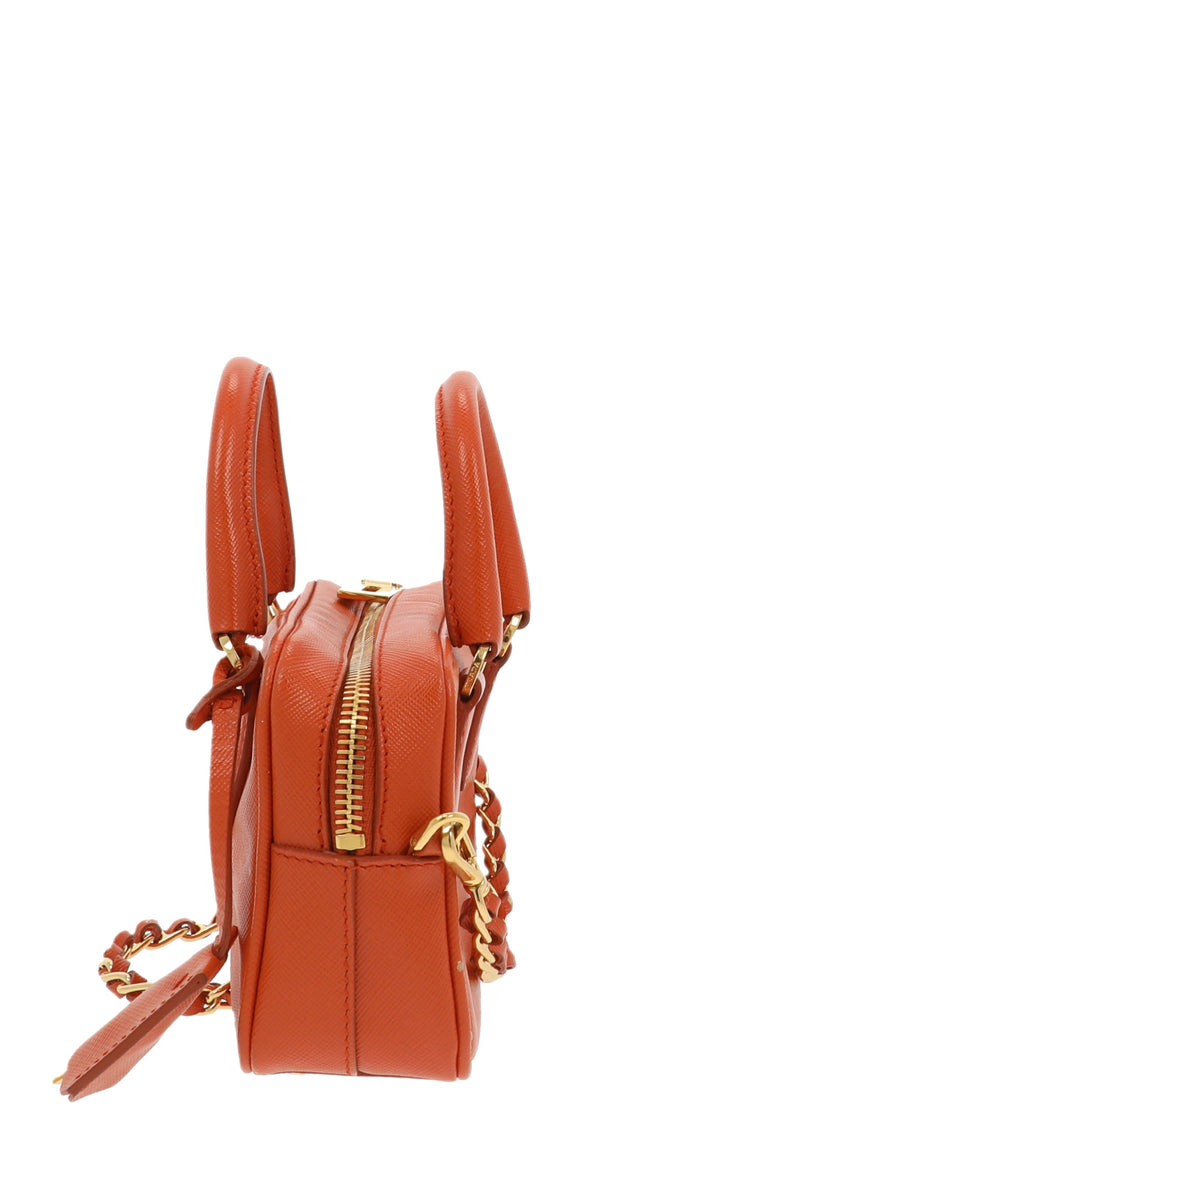 Prada Galleria Crossbody Bag in Orange Leather – Fancy Lux